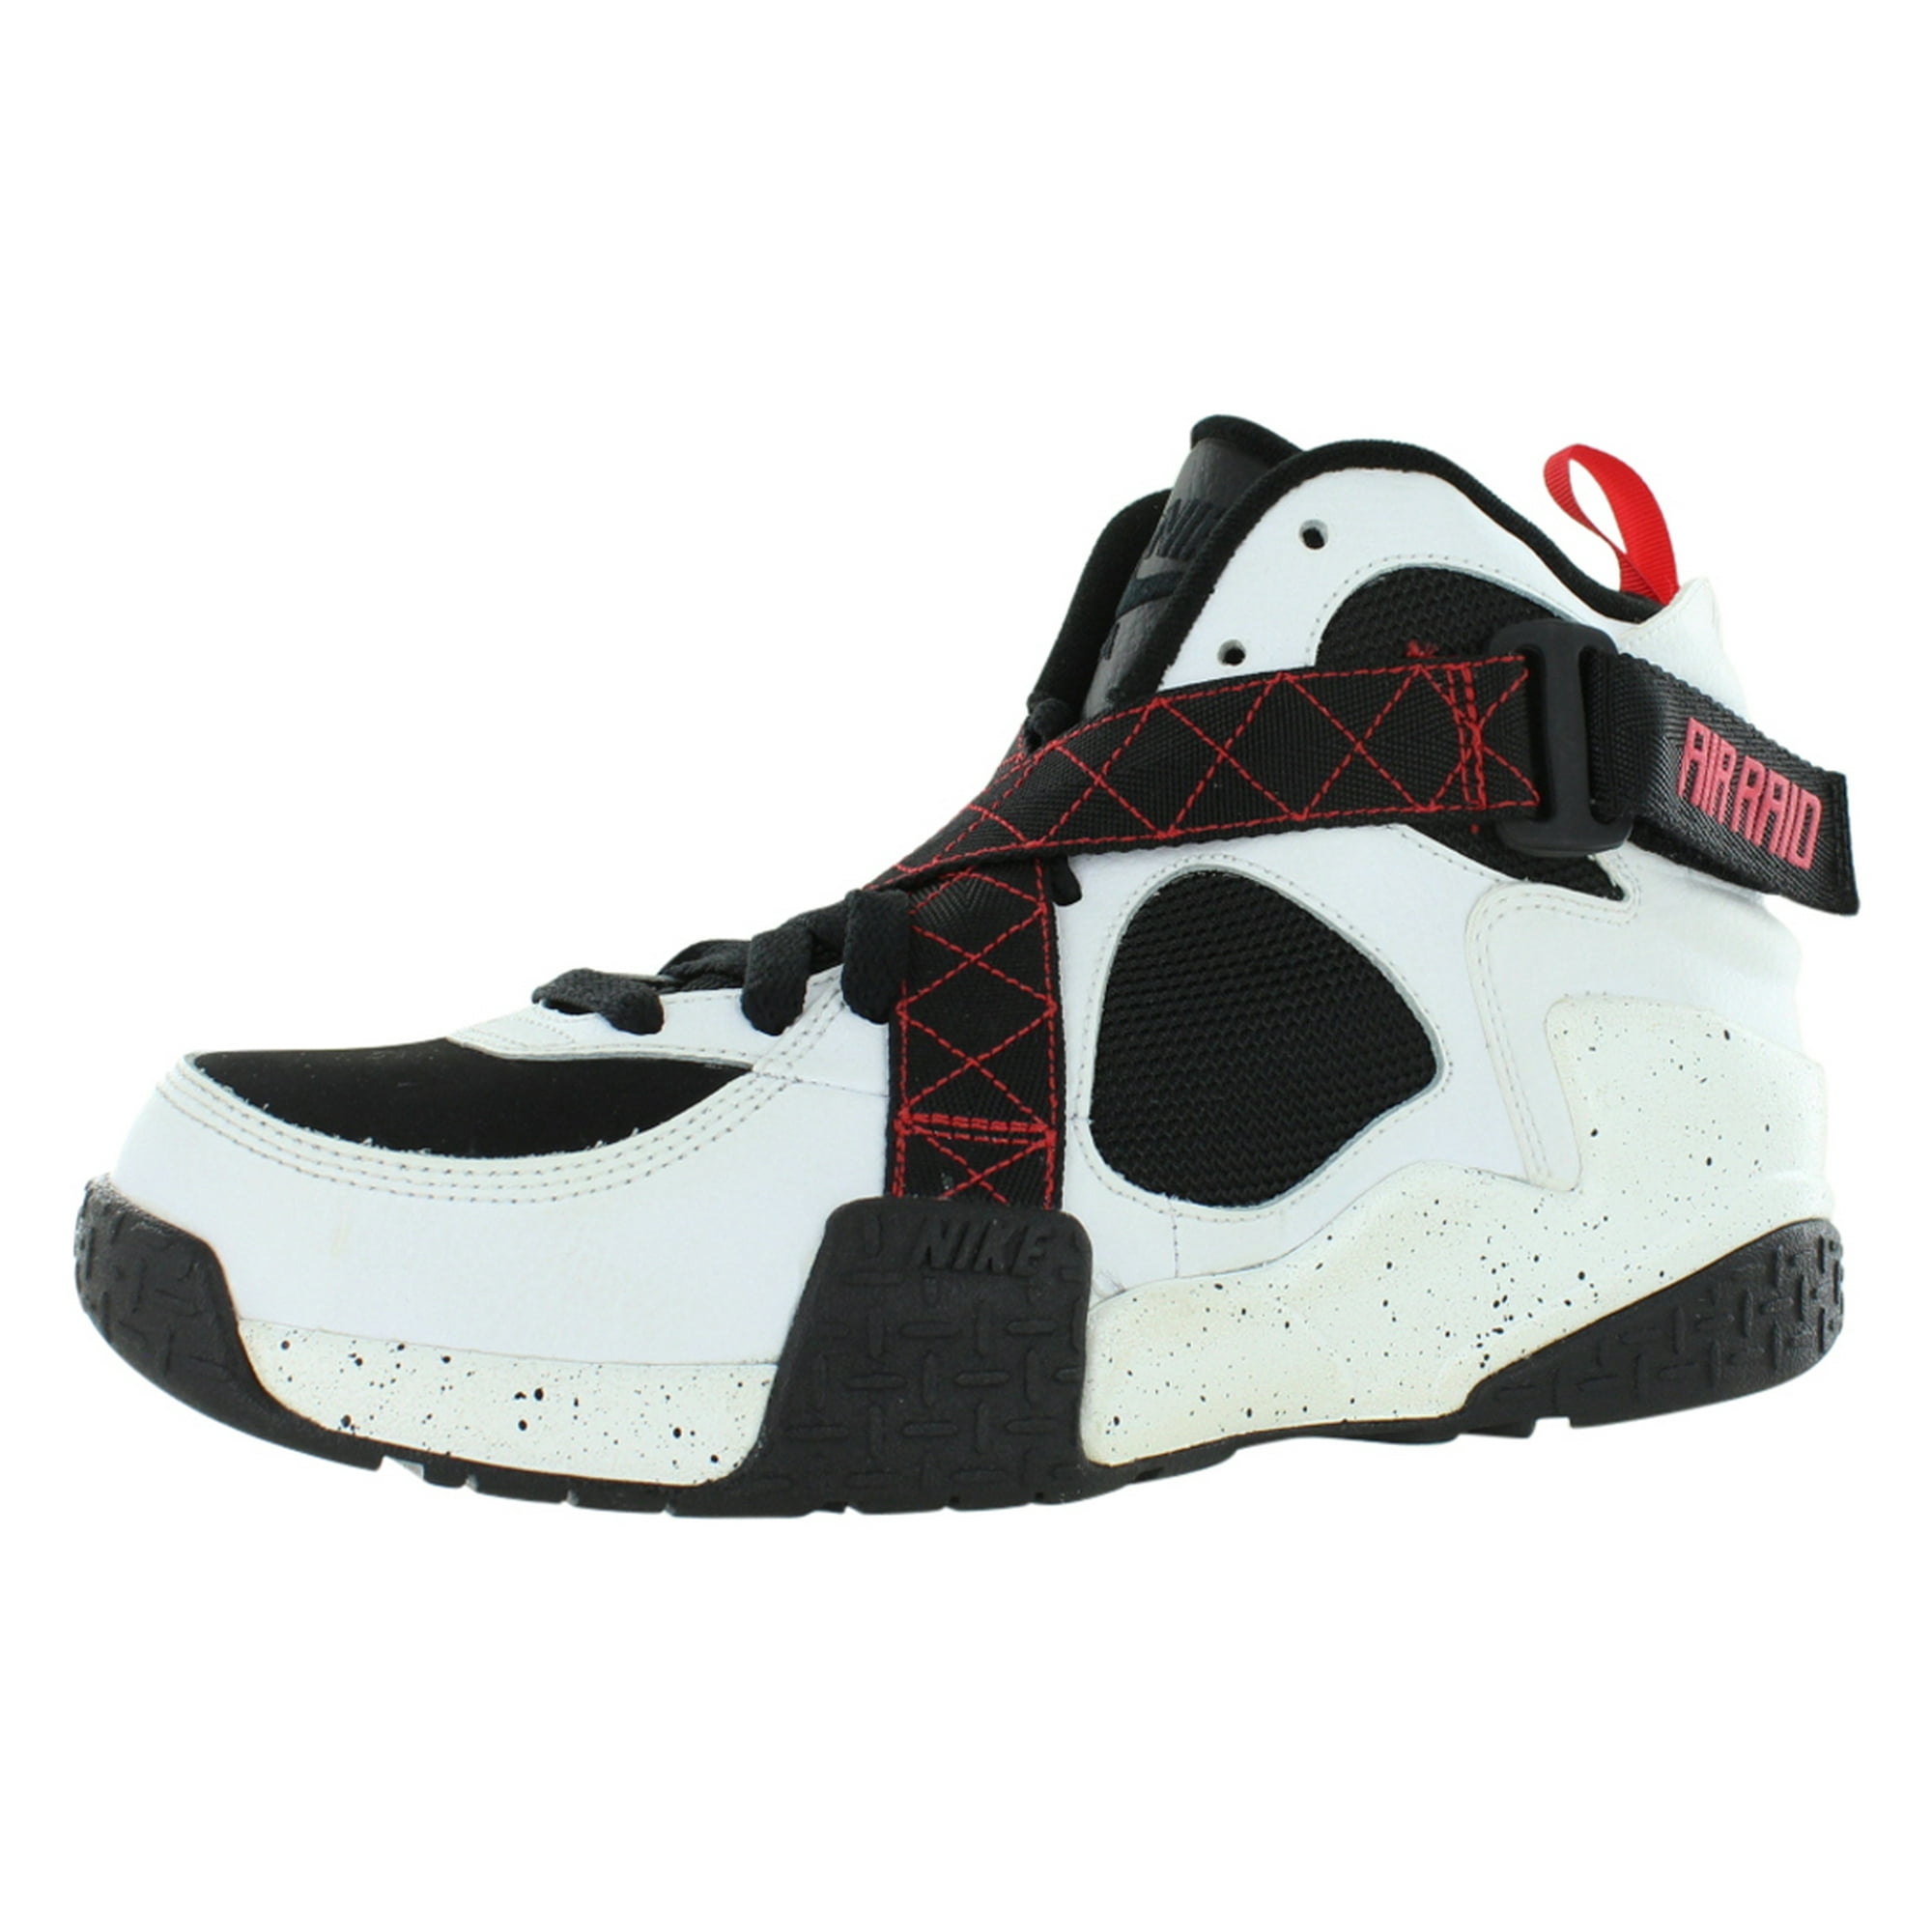 Nike Men's Air Raid OG Basketball Shoes